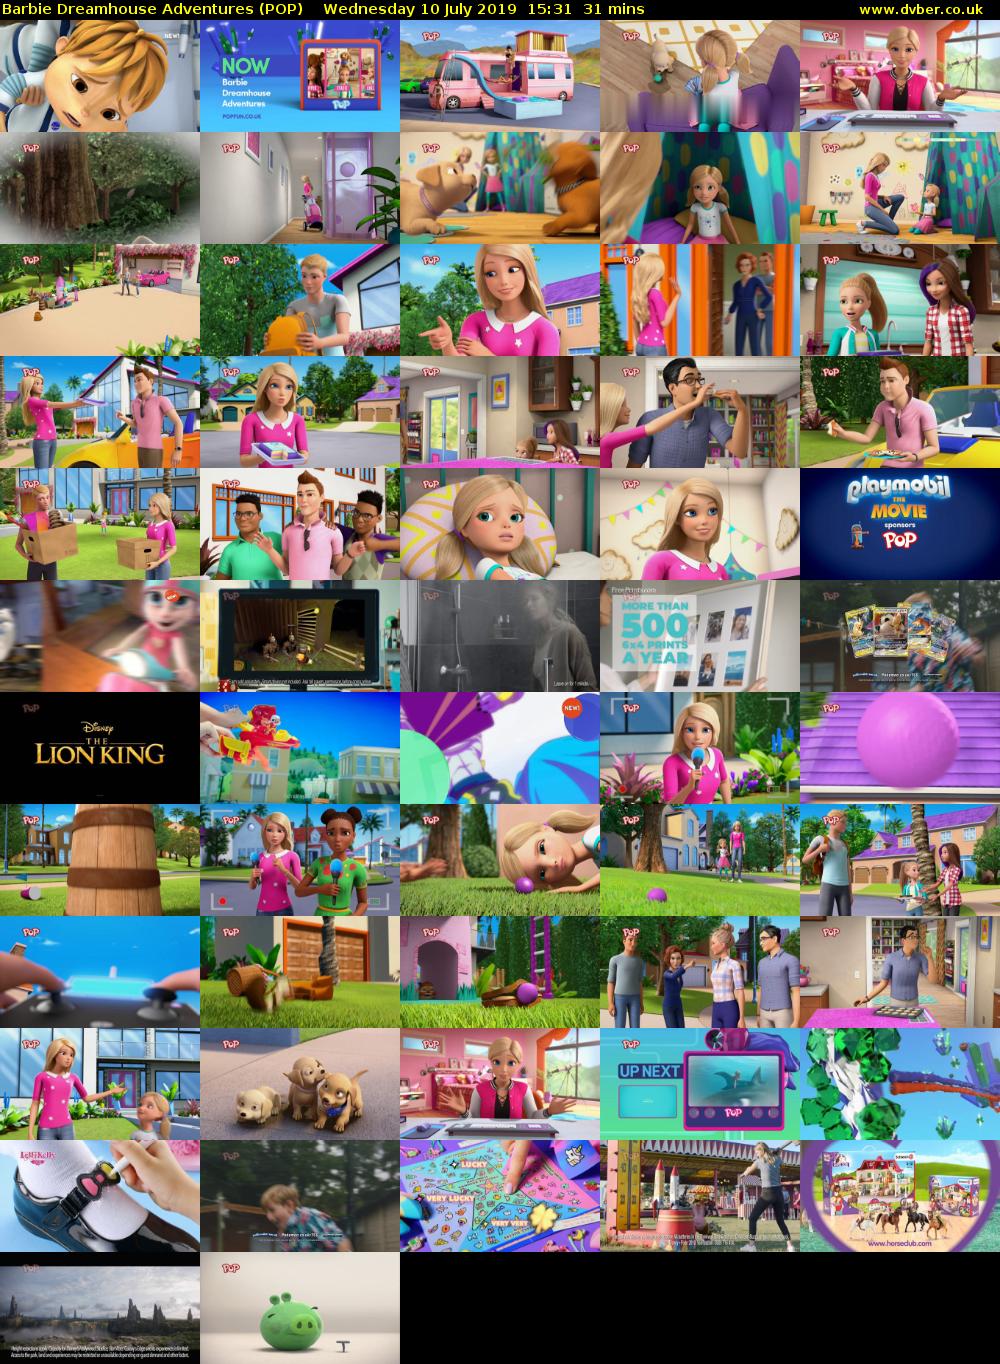 Barbie Dreamhouse Adventures (POP) Wednesday 10 July 2019 15:31 - 16:02